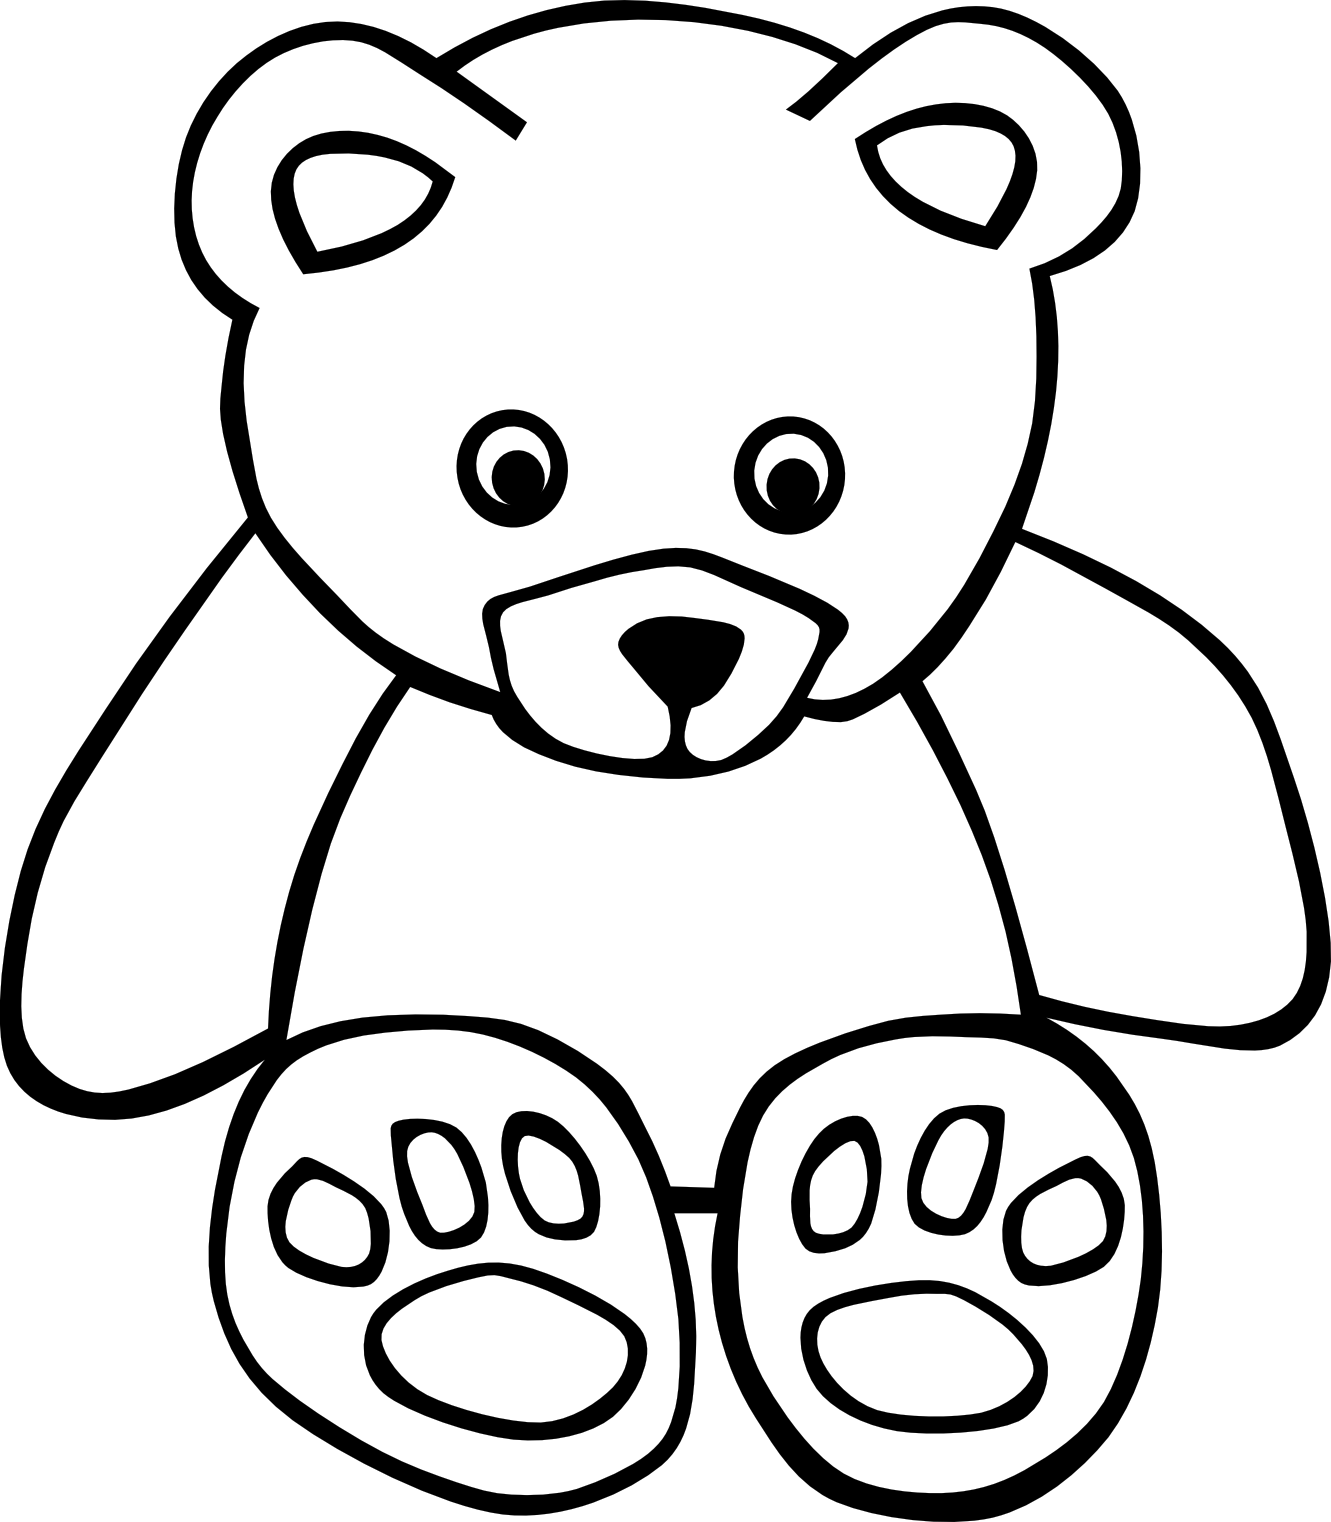 Cartoon Teddy Bears Black And White - ClipArt Best